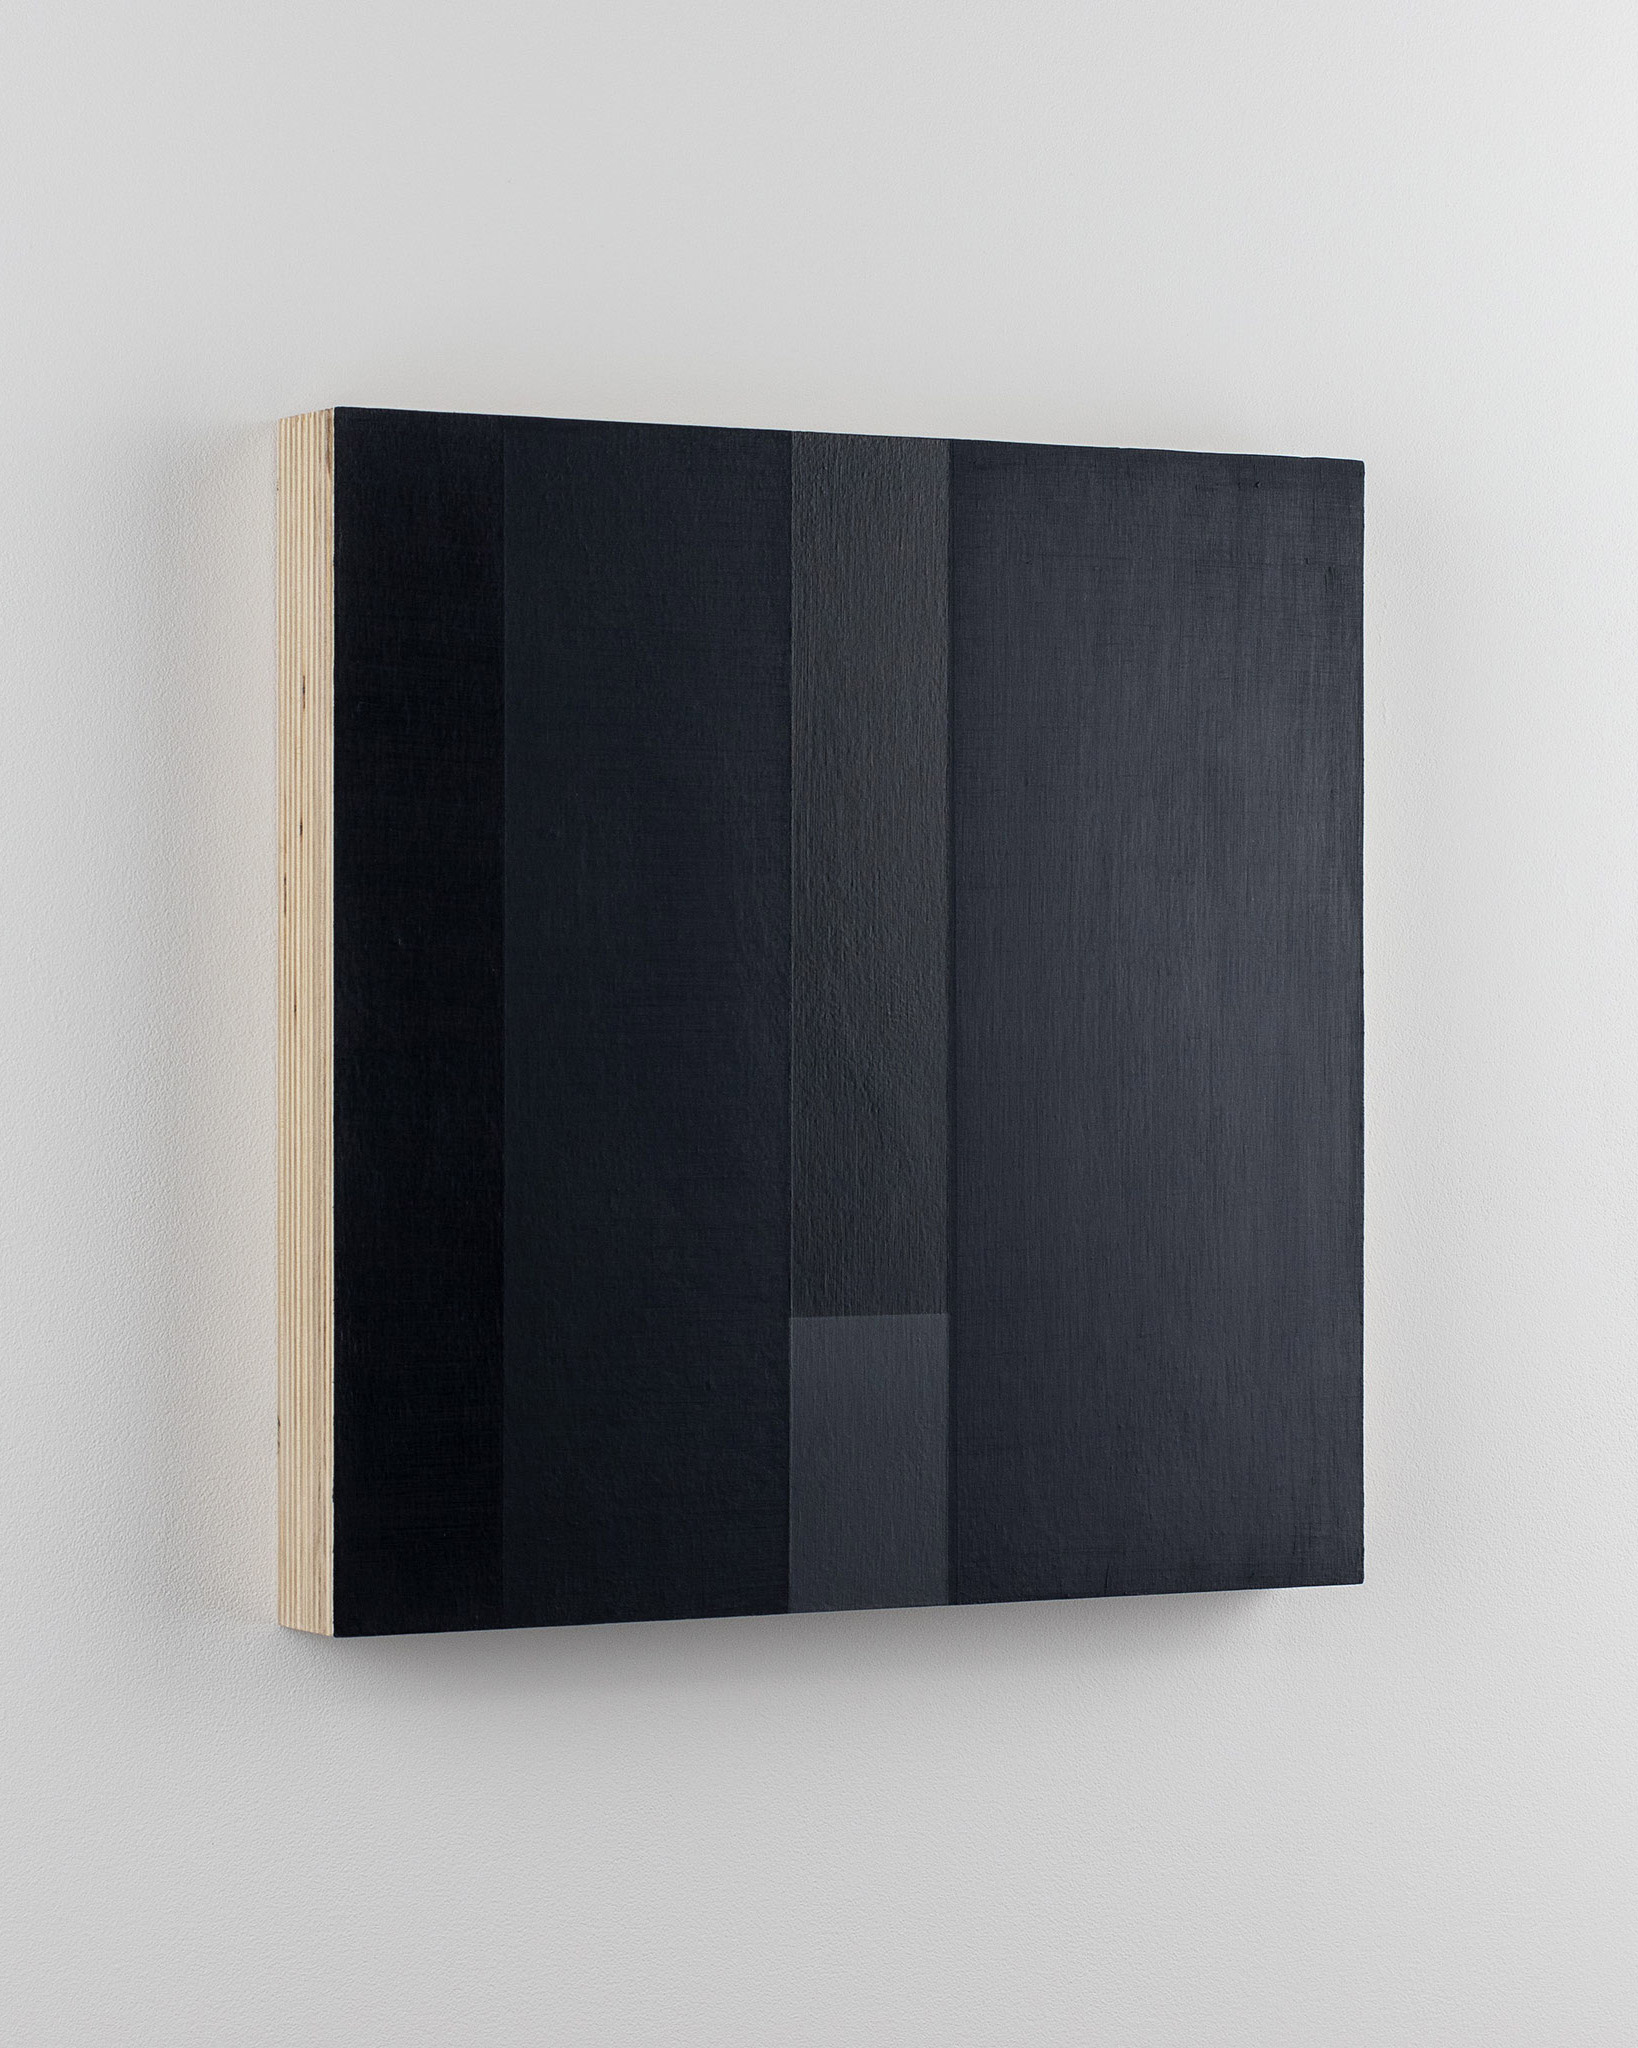 Yvonne Willemse, D11-02, 2021, oil on birch plywood 26 x 26 x 3 cm © The Artist